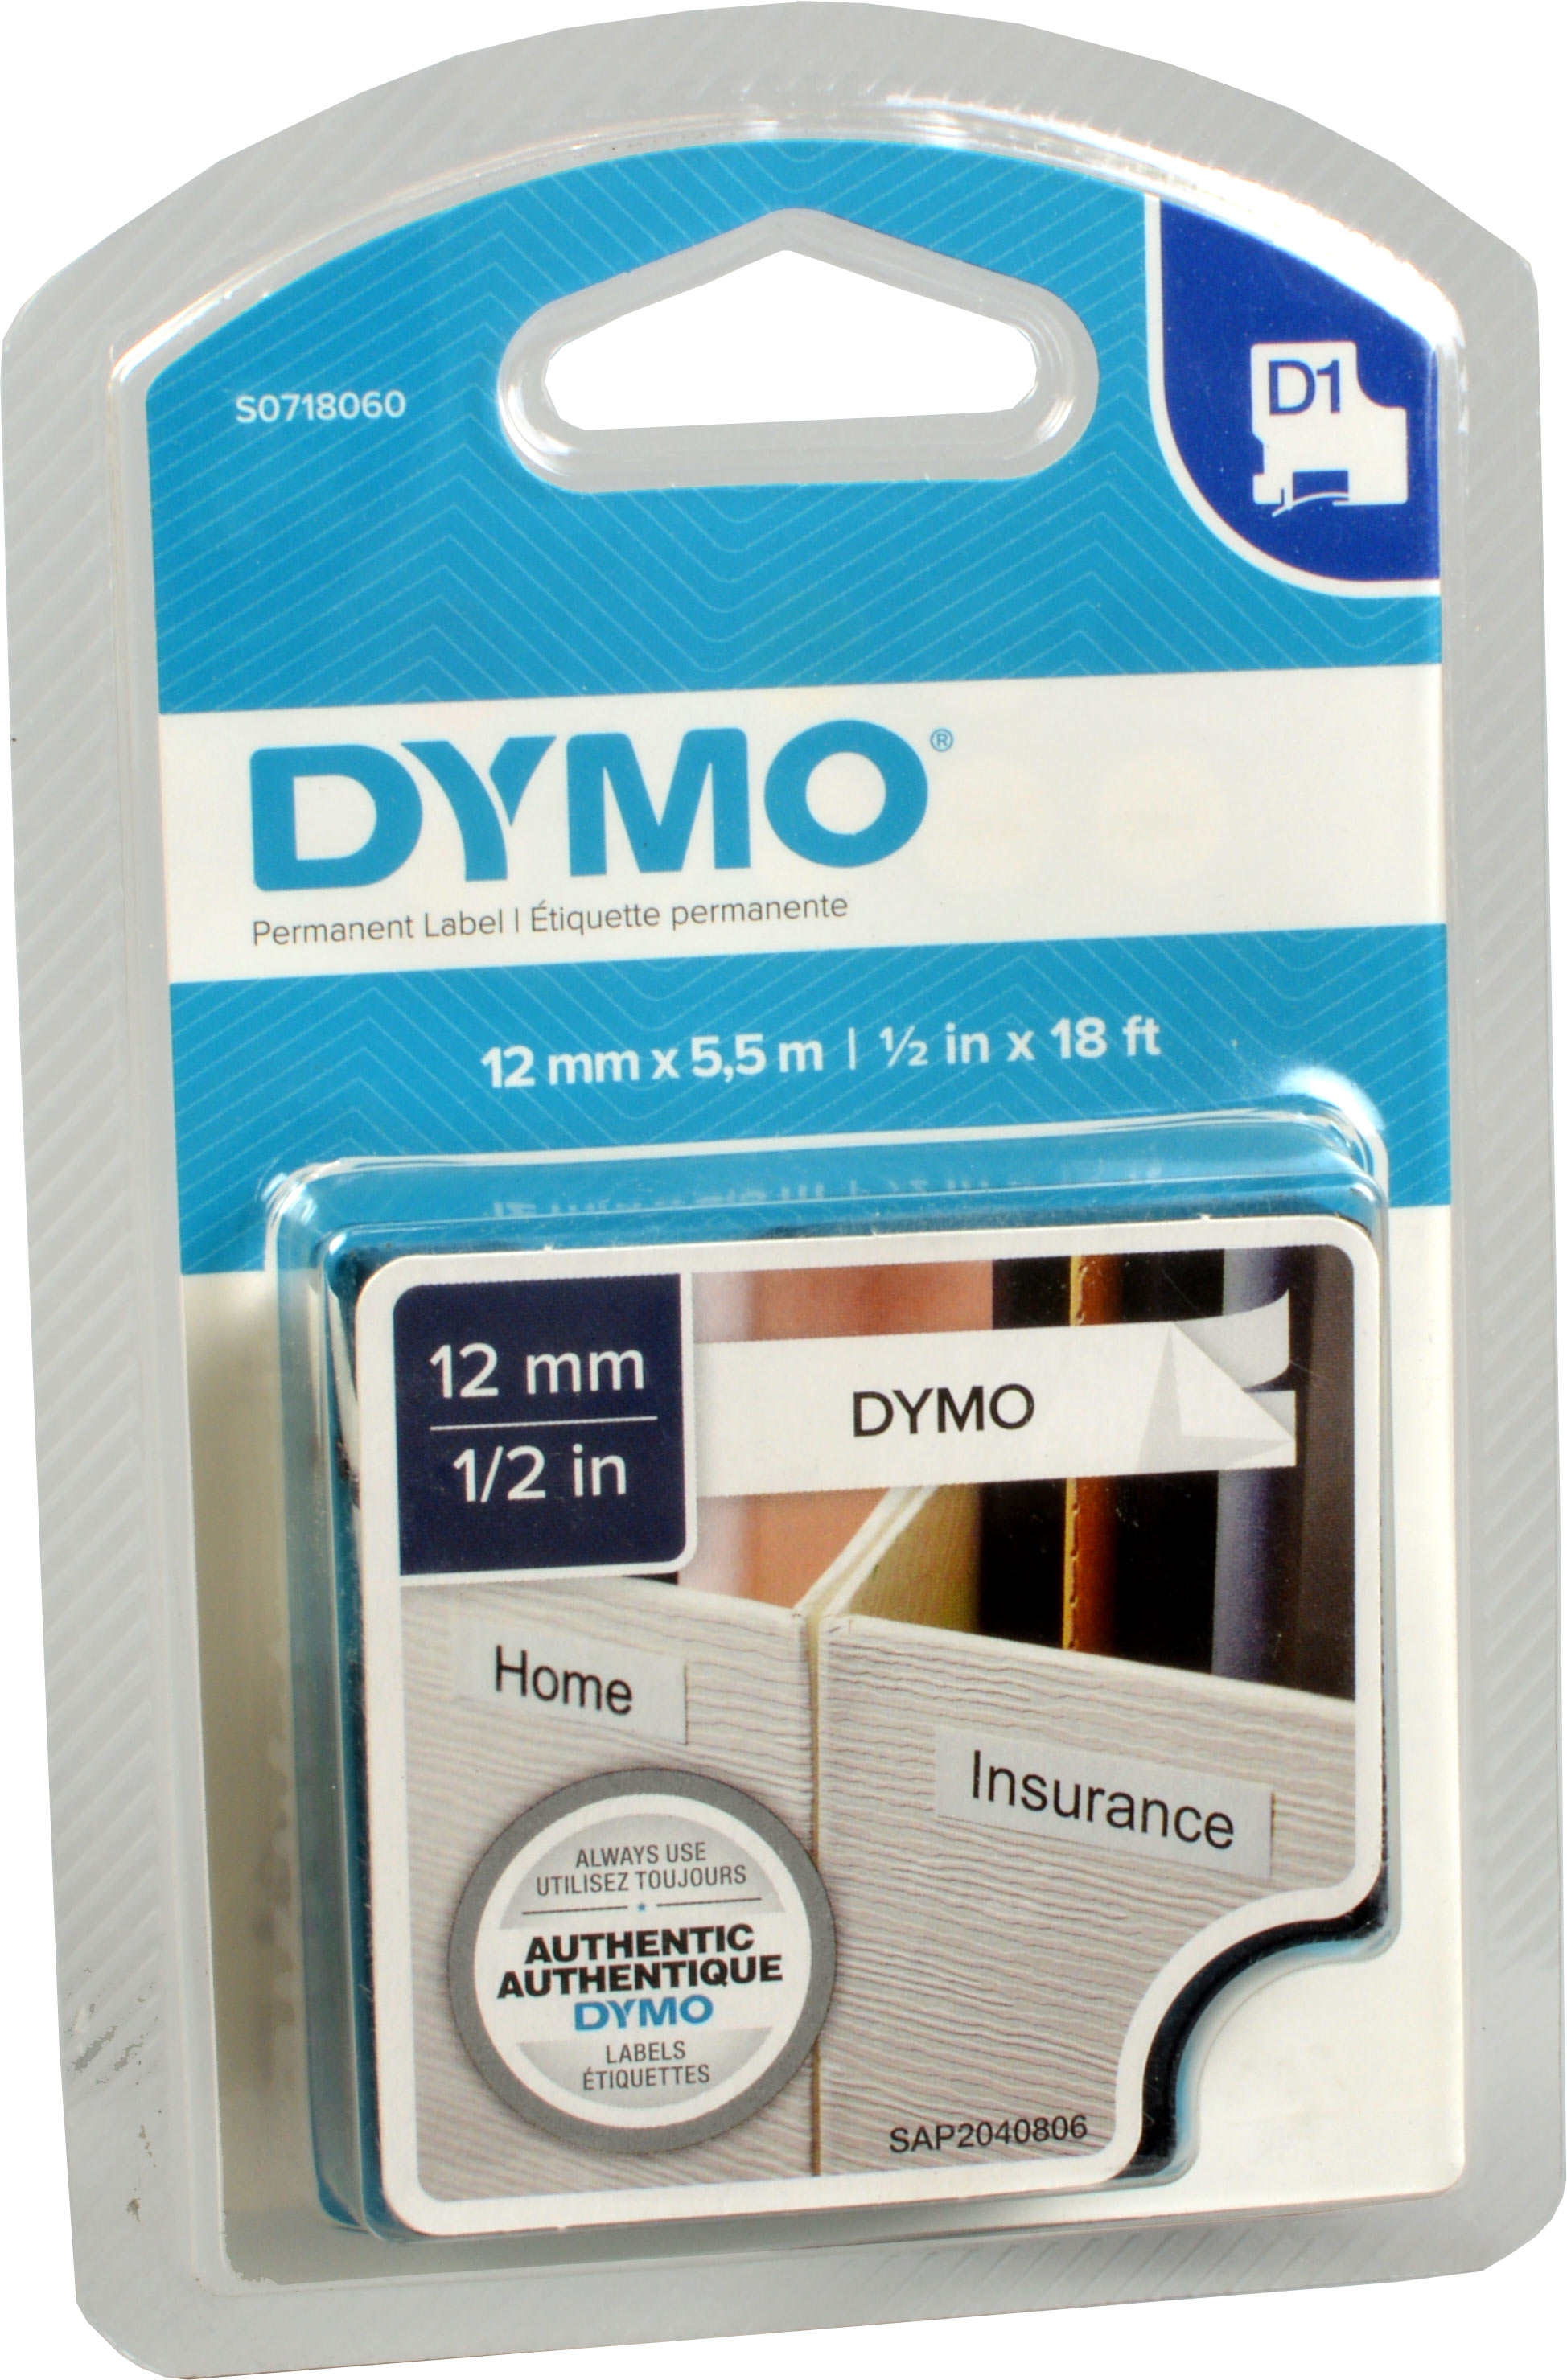 Dymo Originalband 16959  schwarz auf weiß  12mm x 5,5m  Nylon flexibel